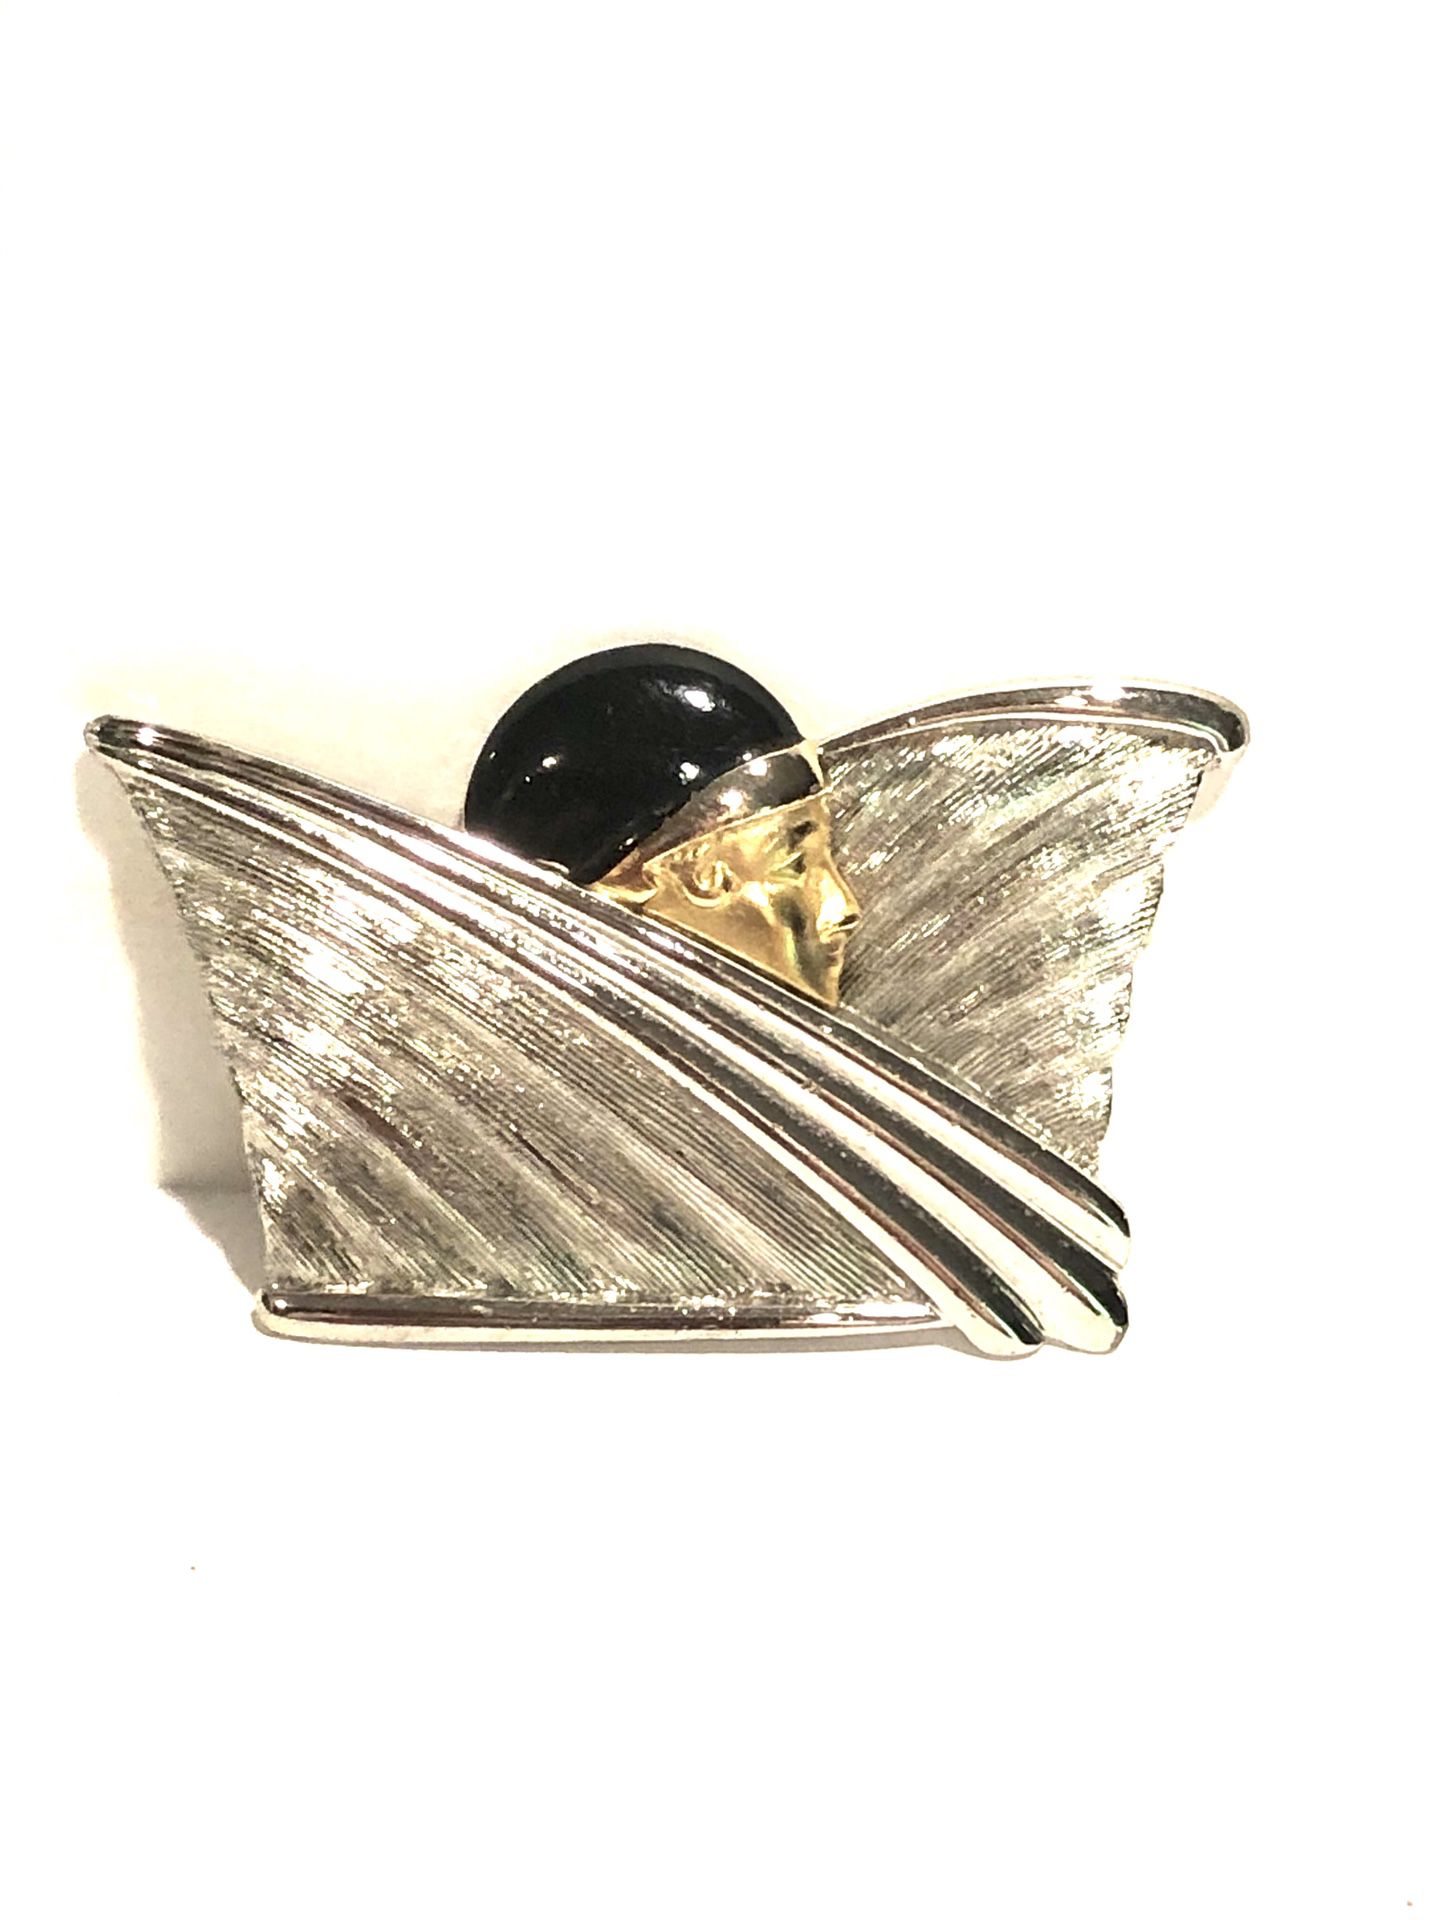 Cool Art Deco flapper pin brooch